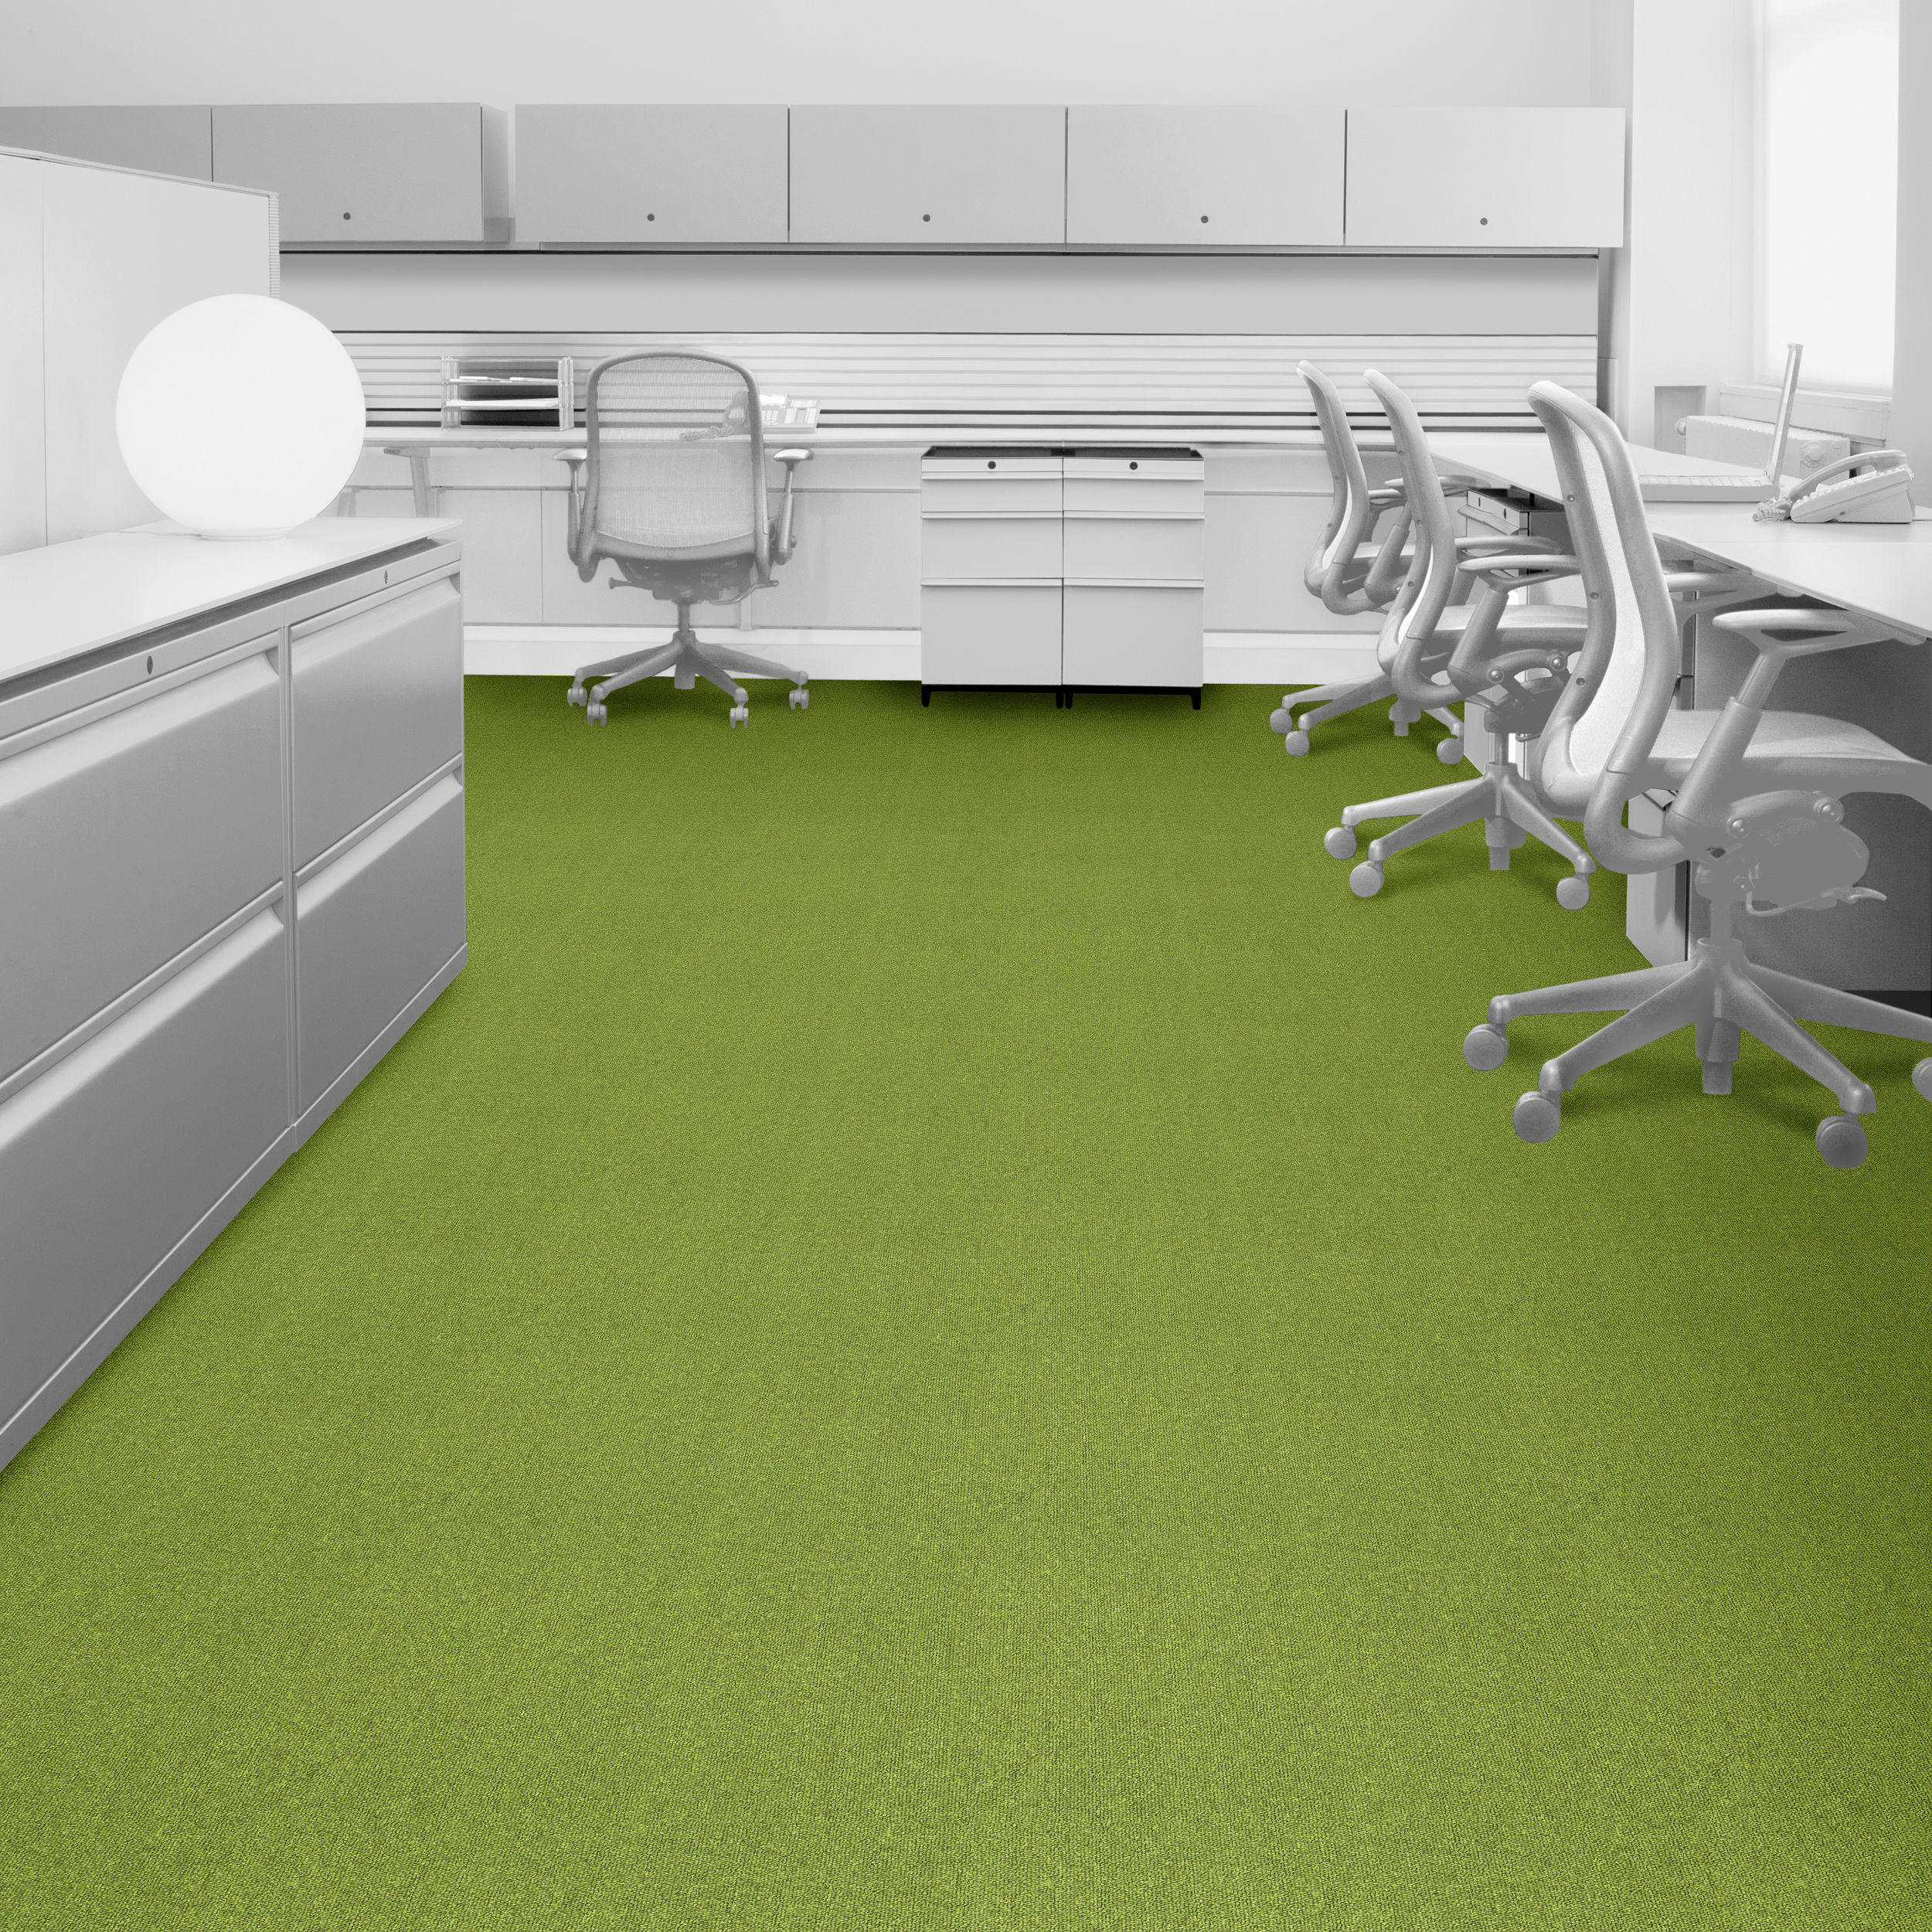 Interface Heuga 580 Carpet Tile - Lime variation in office setting.